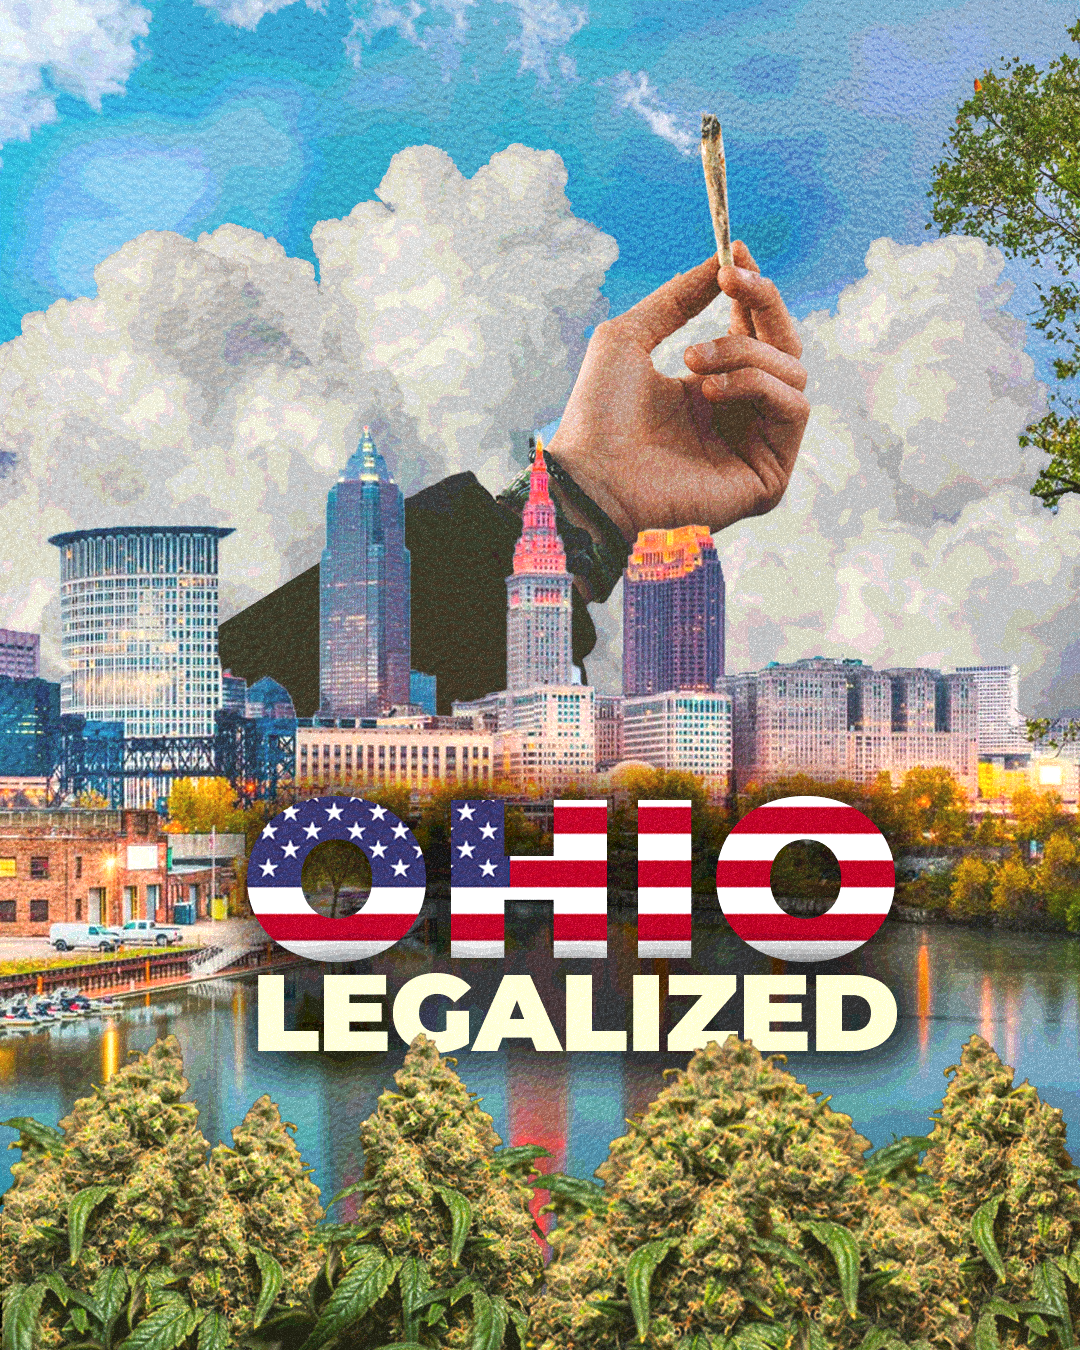 Ohio Voters Approve Recreational Marijuana, Marking a Milestone in State Cannabis Legalization